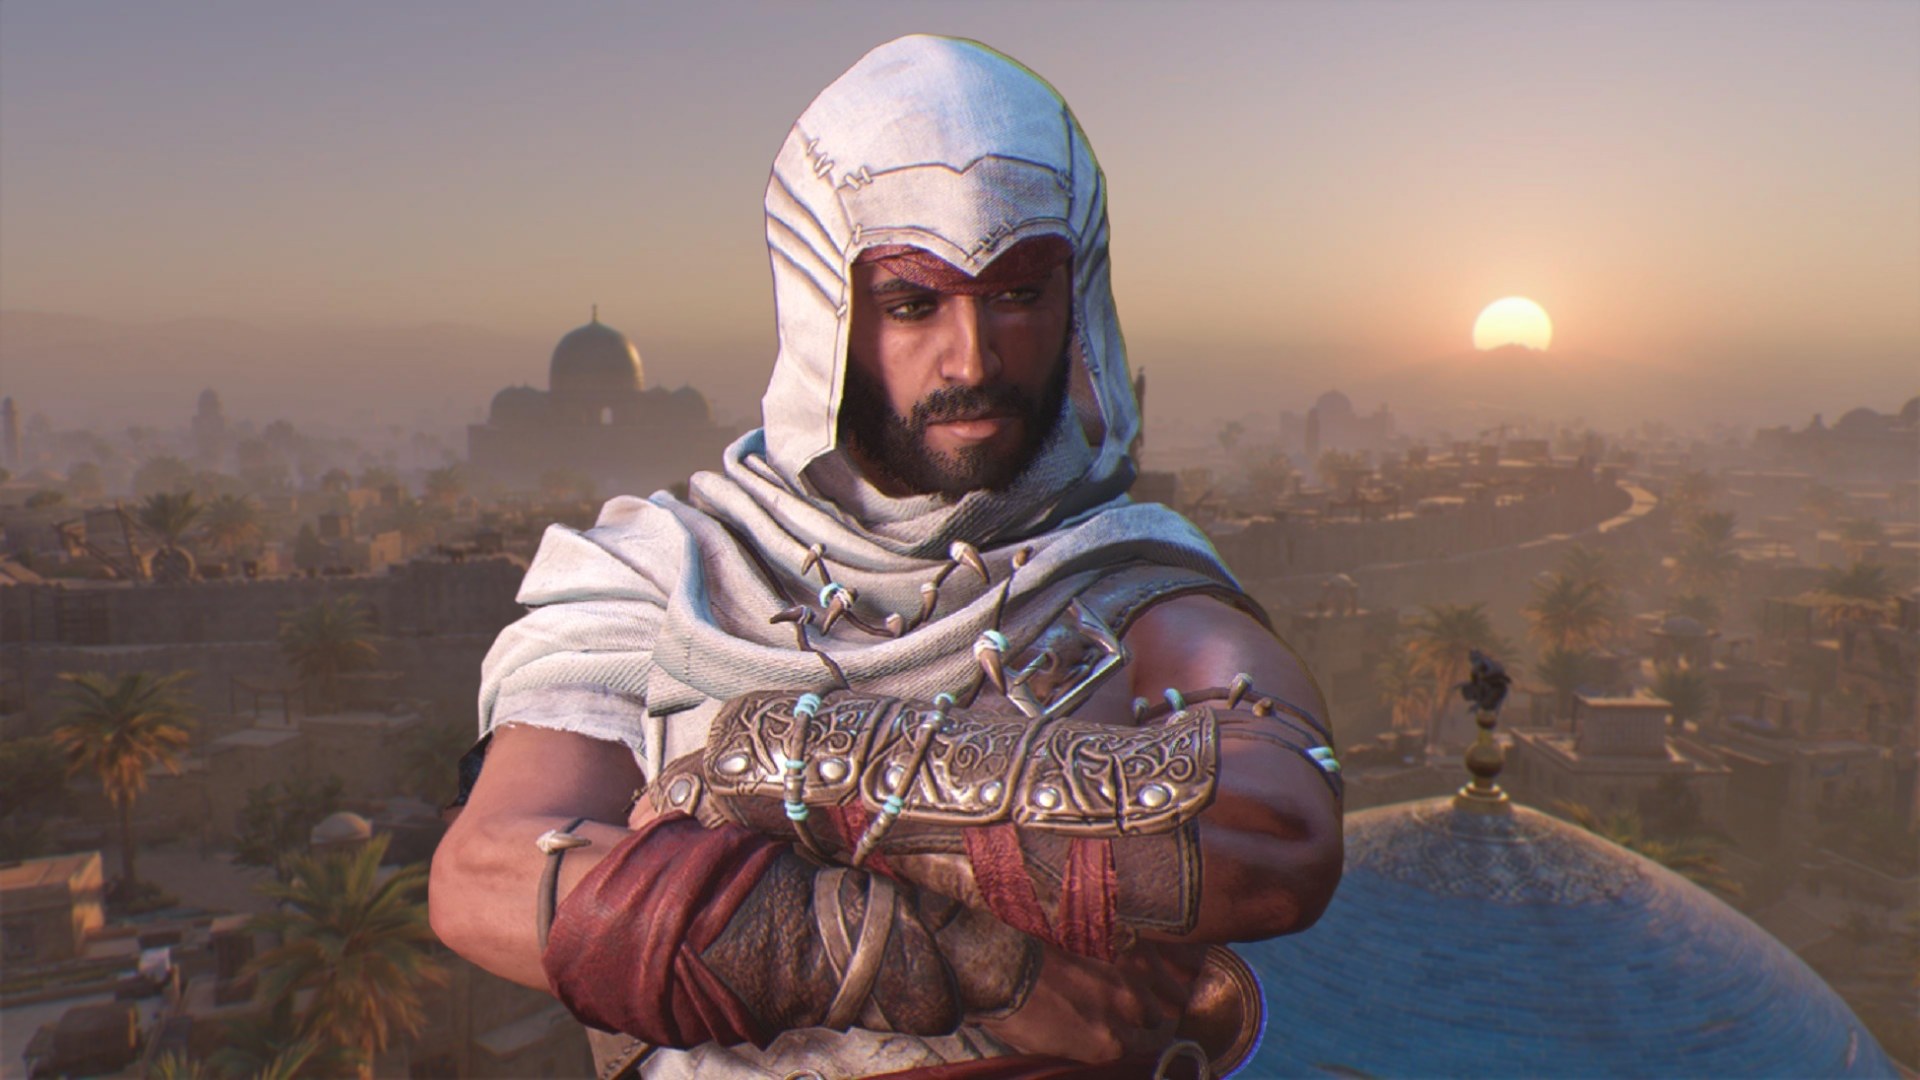 Assassin's Creed Mirage, OT, Basim, the Origin